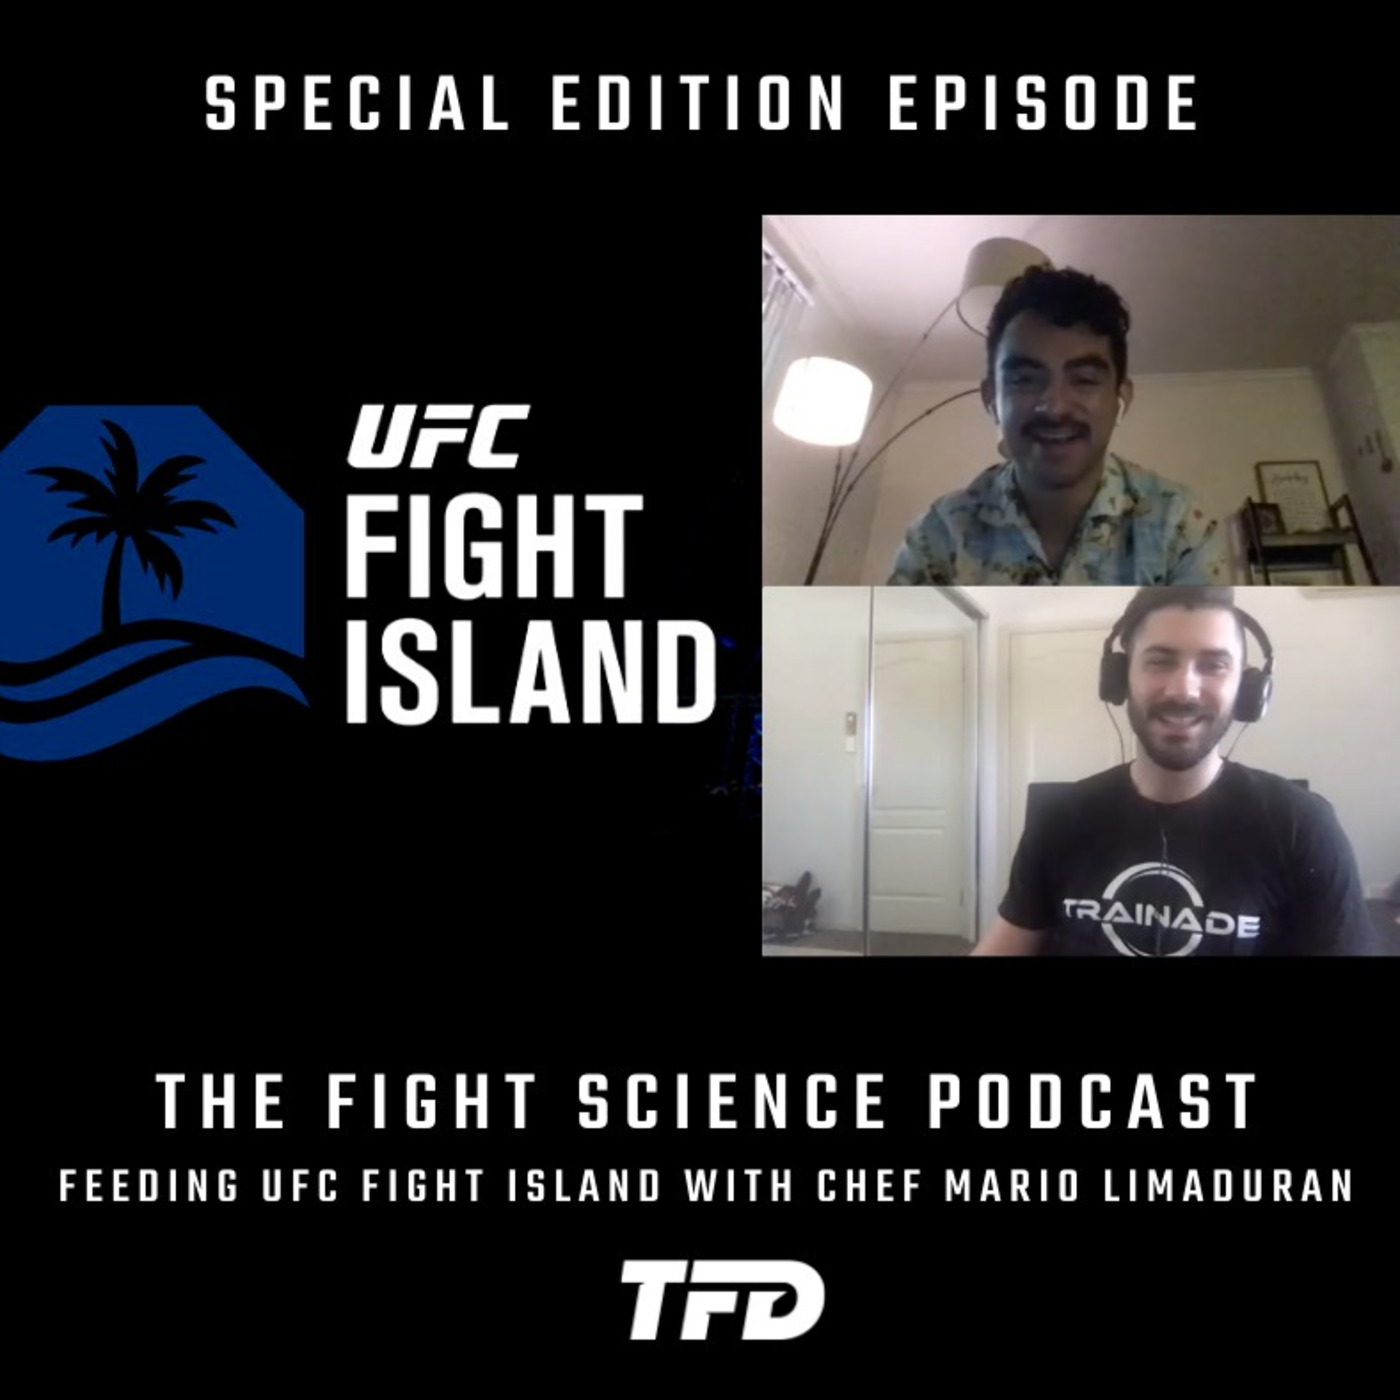 Feeding UFC Fight Island with Chef Mario Limaduran